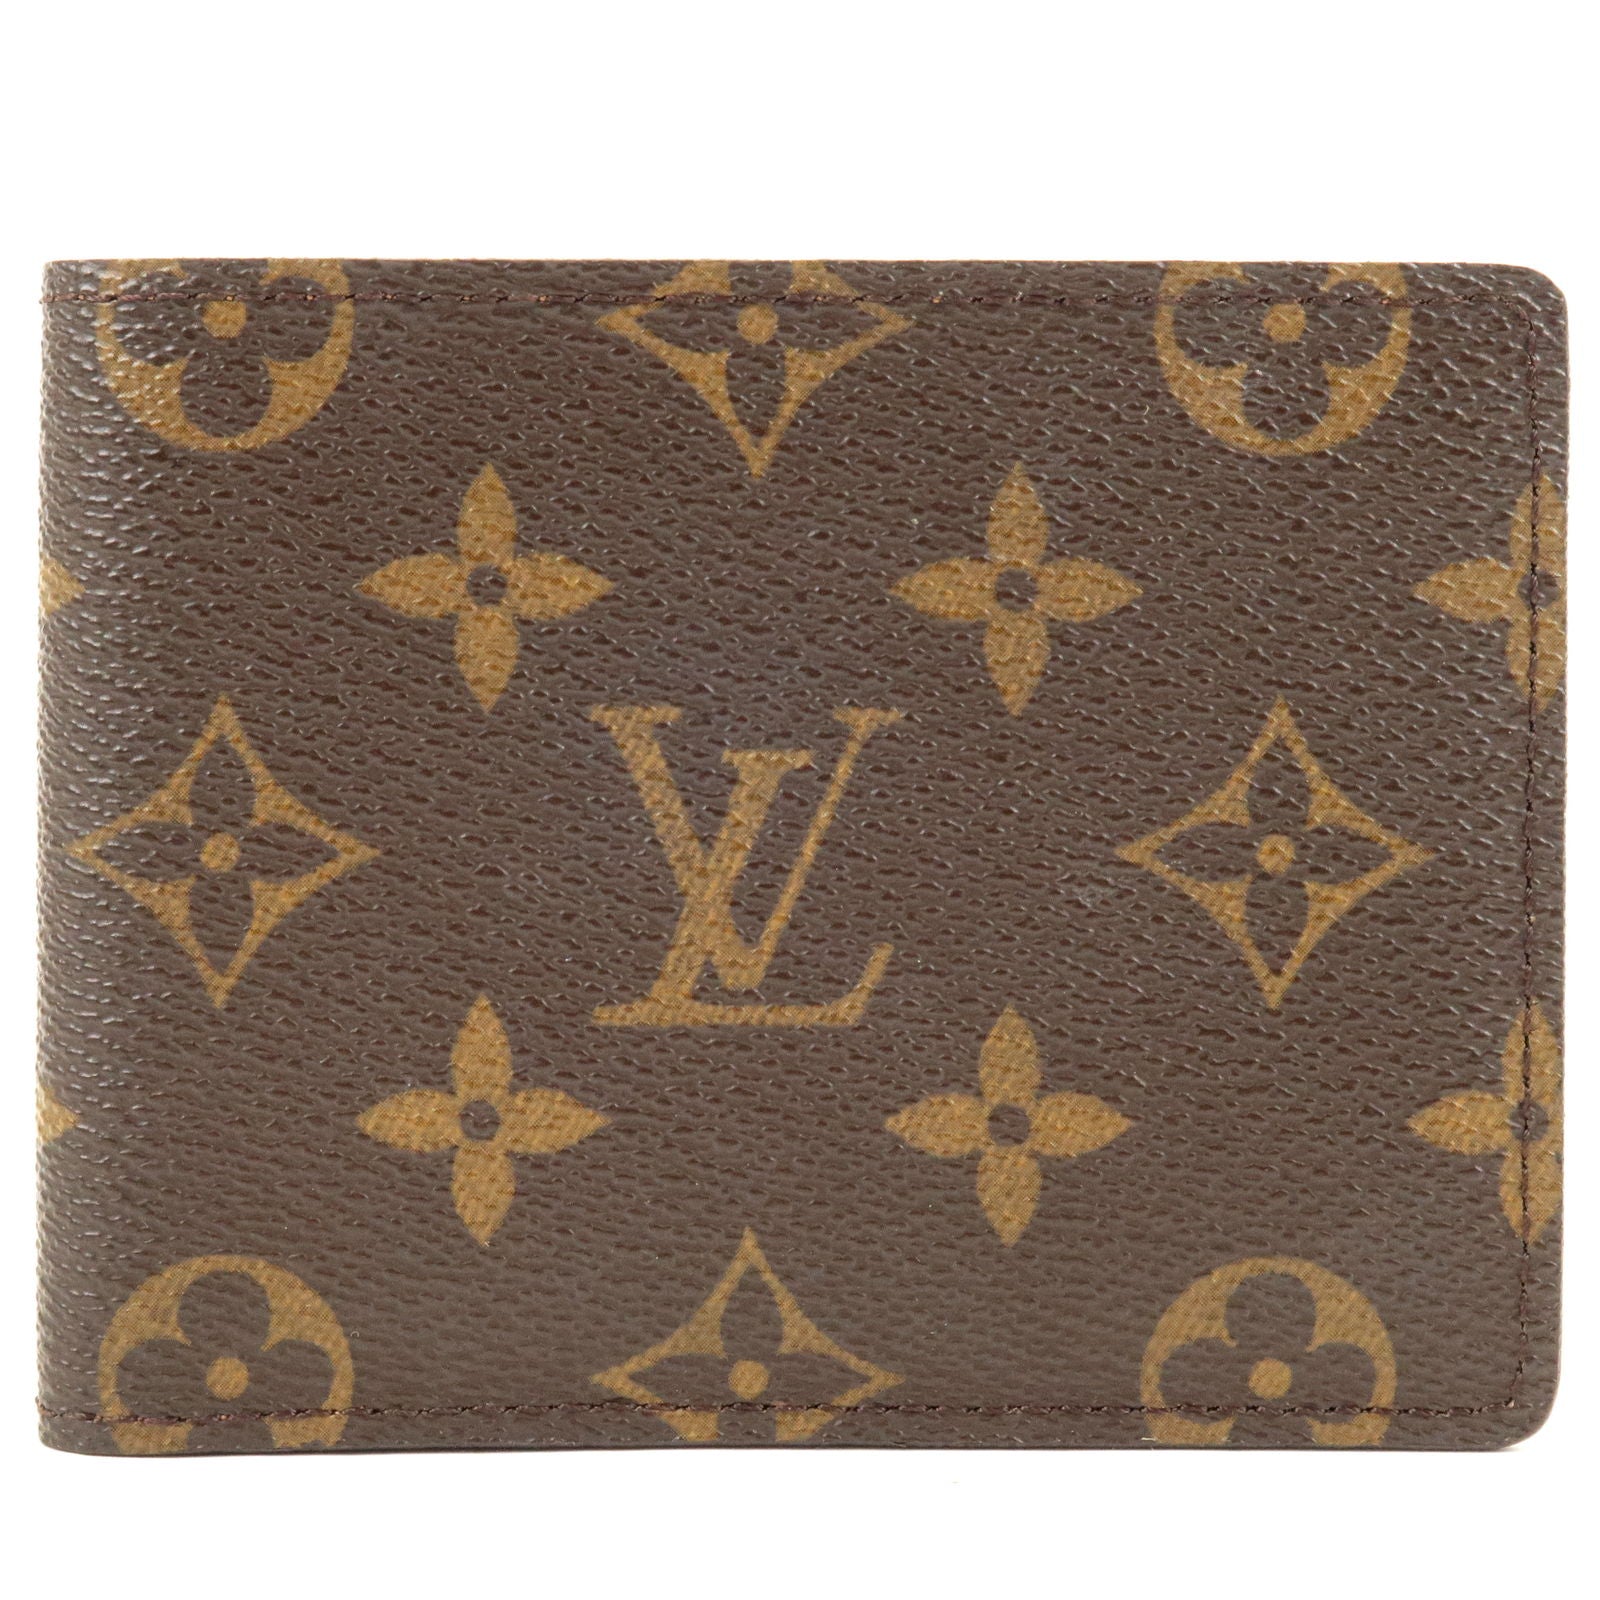 fold - Bi - Vuitton - Wallet - Small - M60895 – Louis Vuitton All